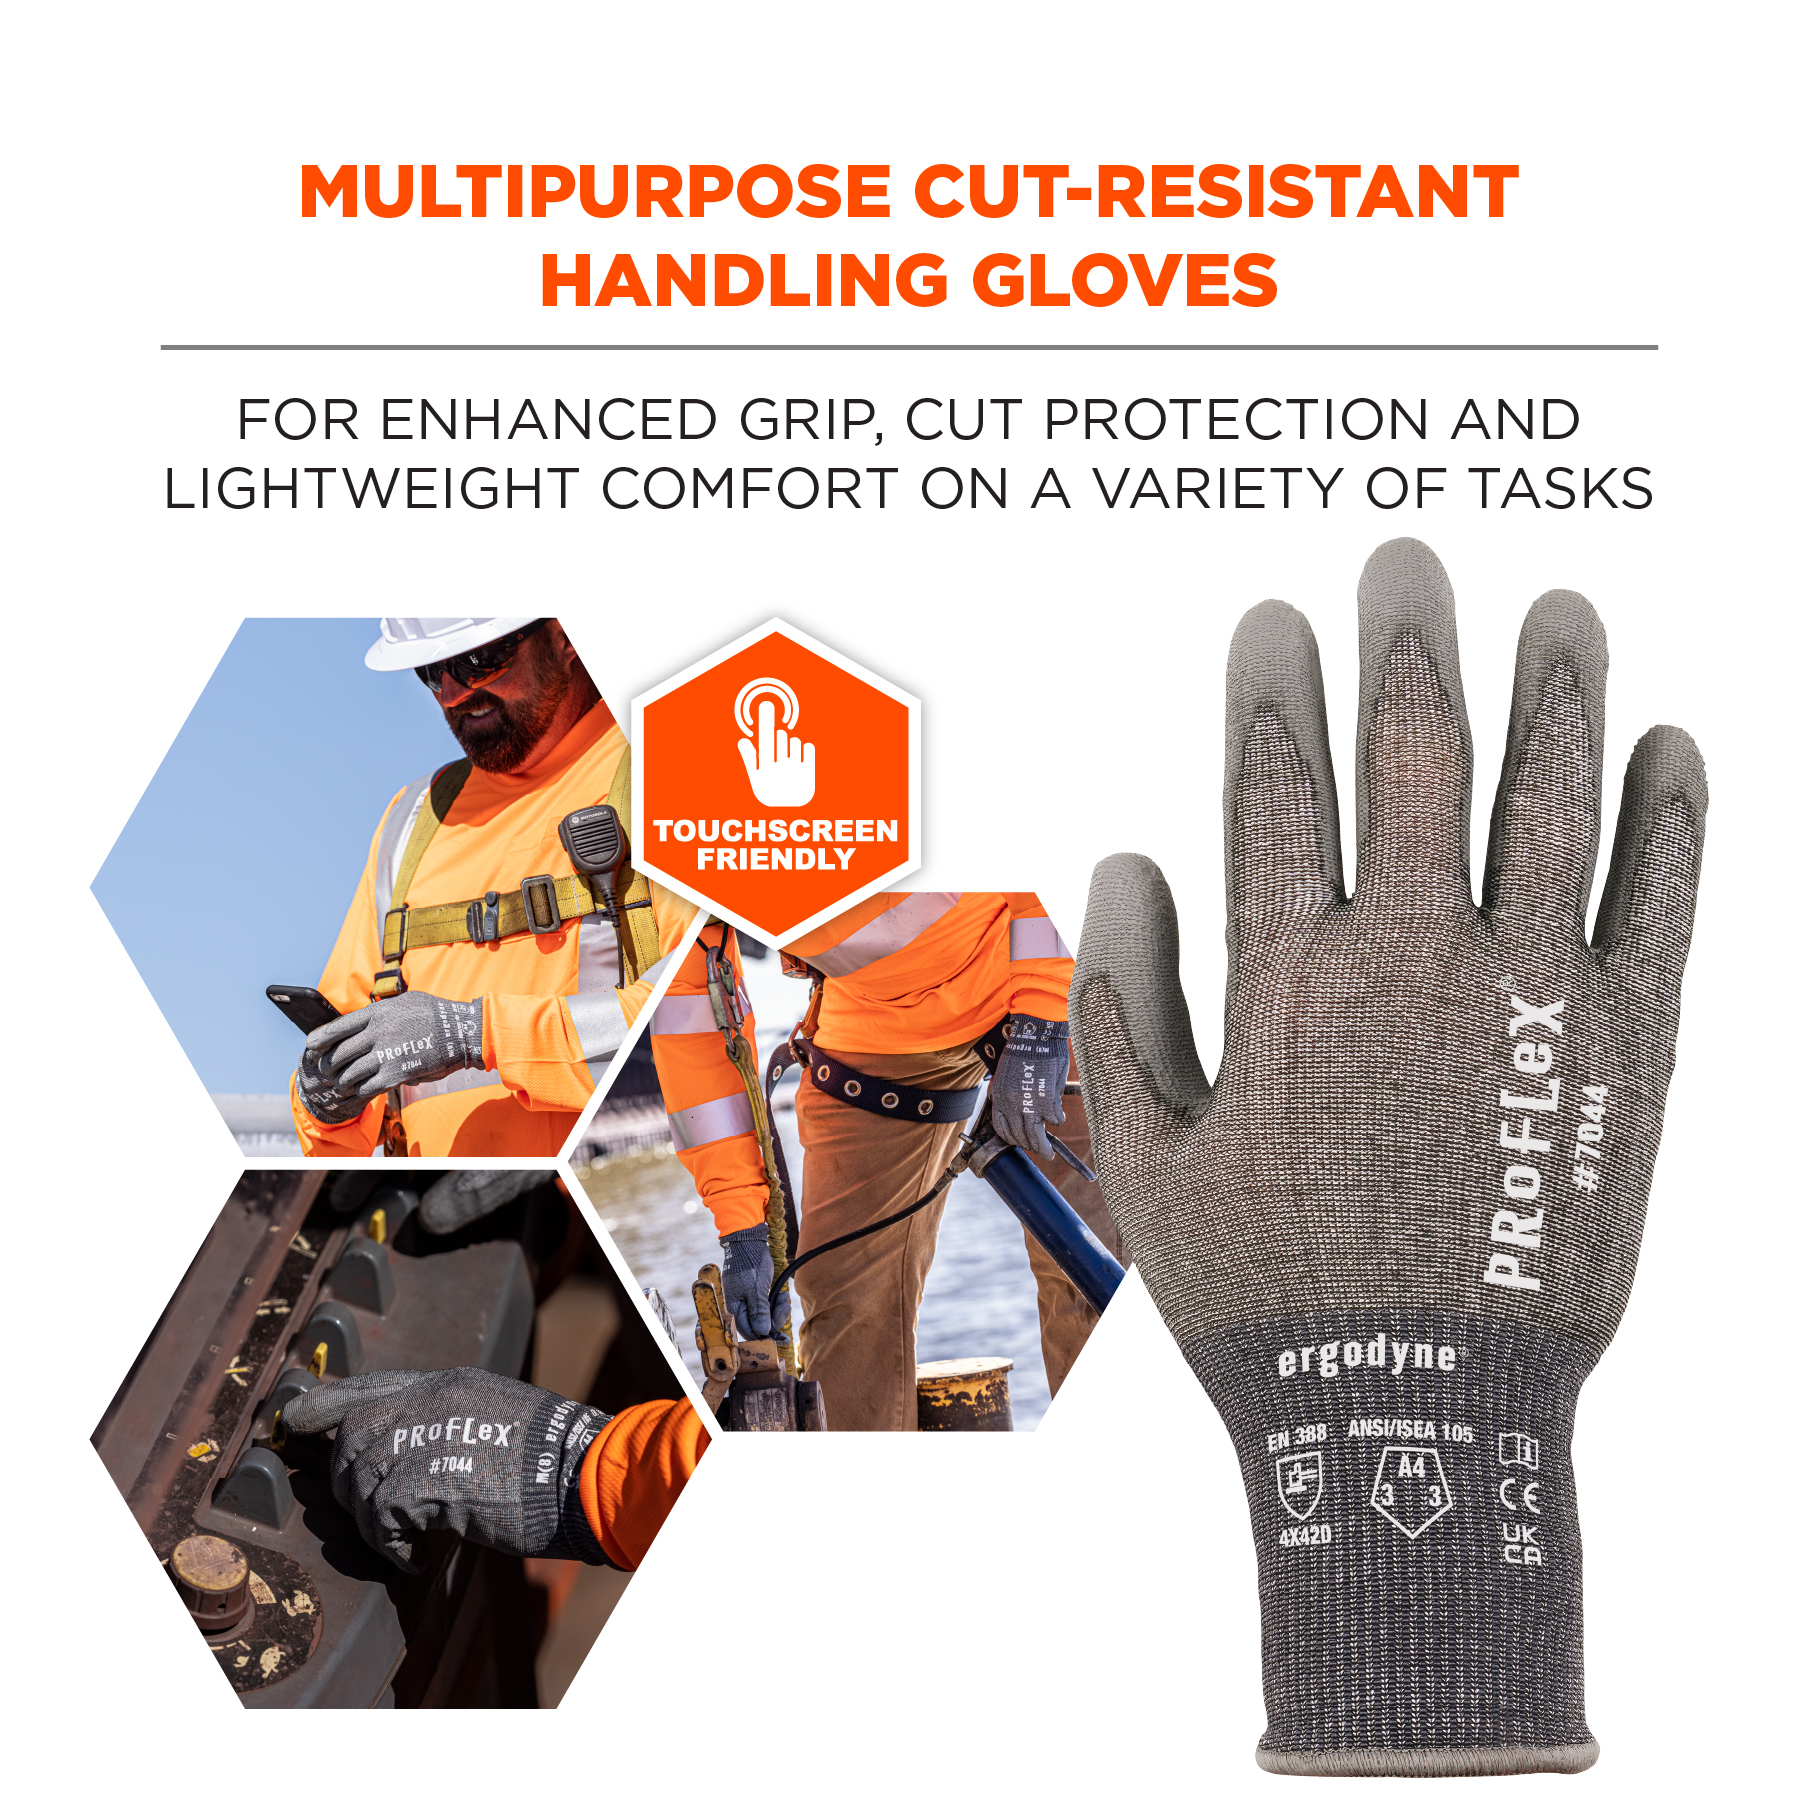 https://www.ergodyne.com/sites/default/files/product-images/10491-7044-ansi-a4-pu-coated-cr-gloves-gray-multipurpose-cut-resistant-handling-gloves.jpg